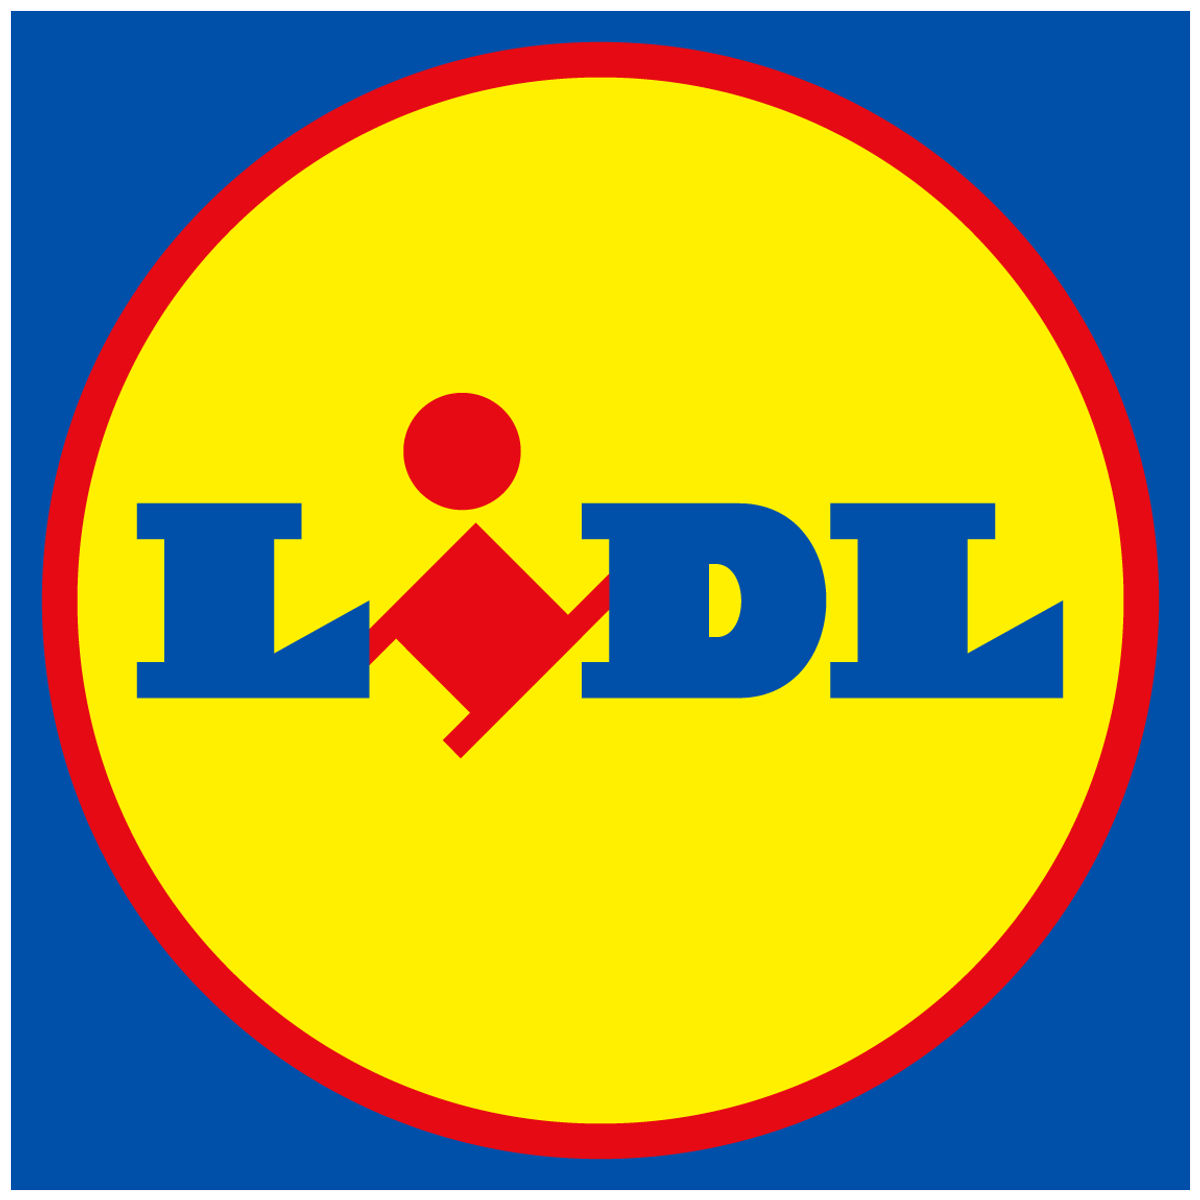 Lidl Nederland GmbH